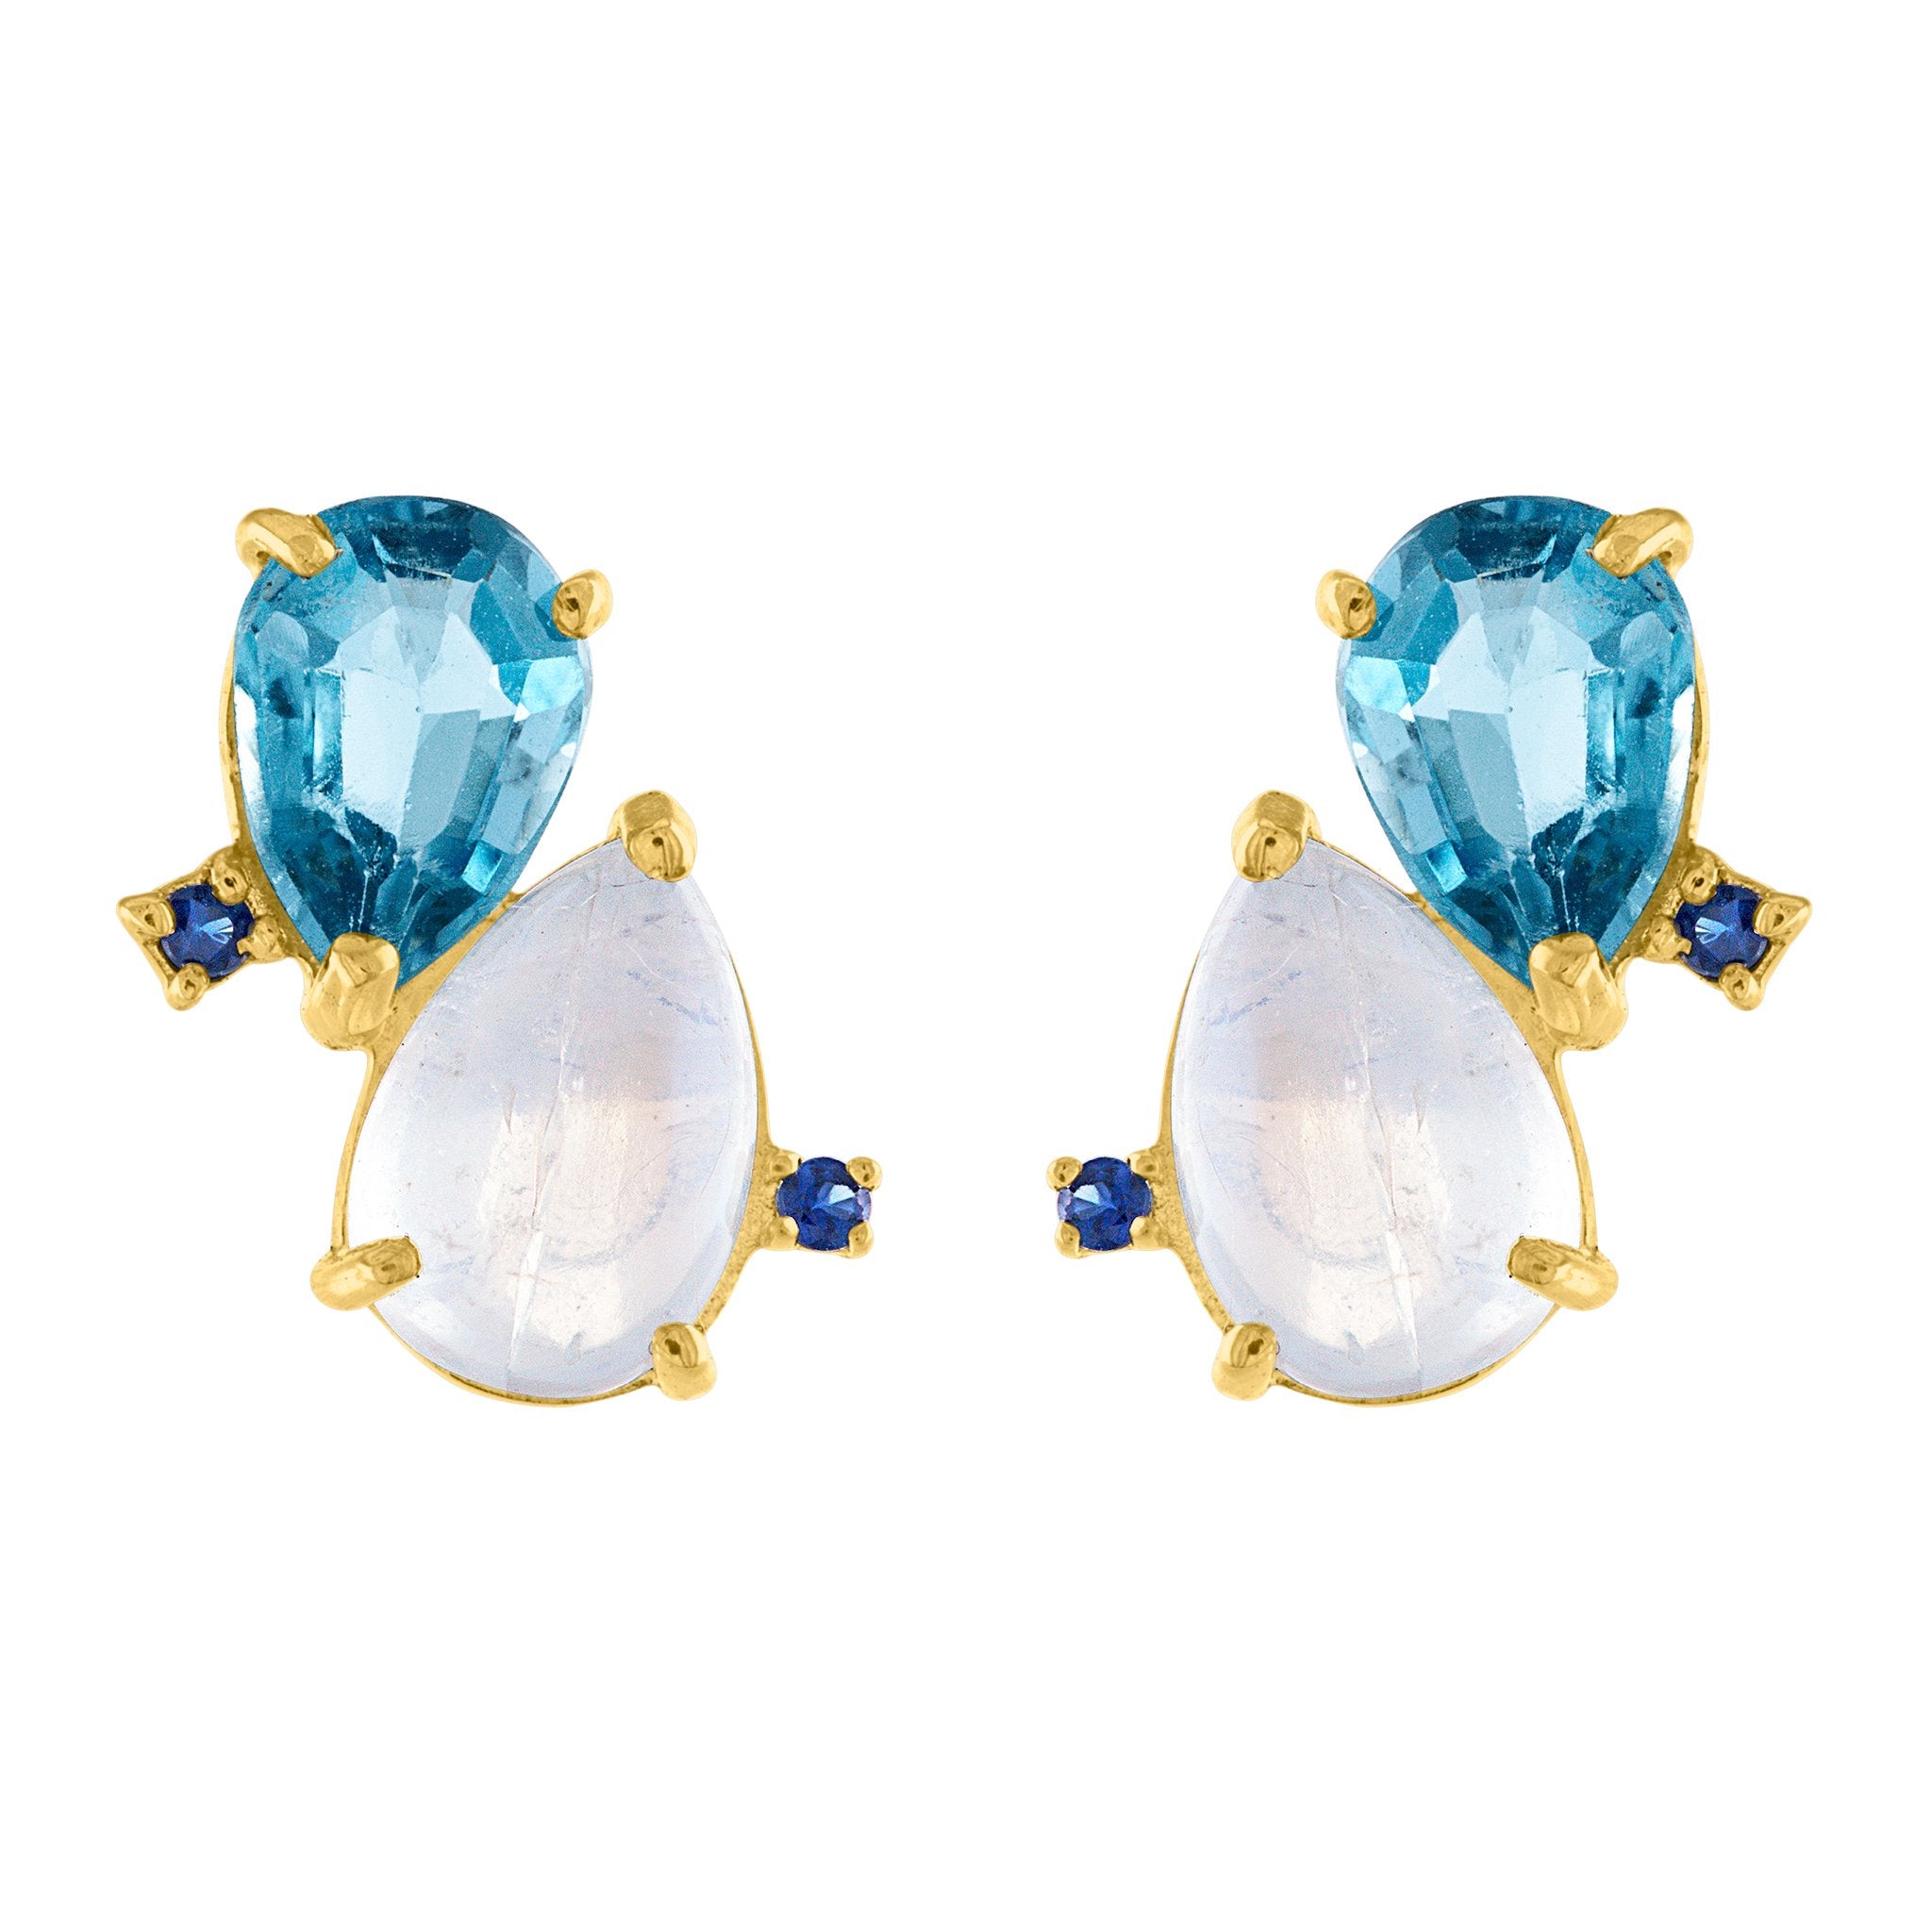 Coud Stud Earrings: 14k Gold, Moonstone, London Blue Topaz, Blue Sapphire